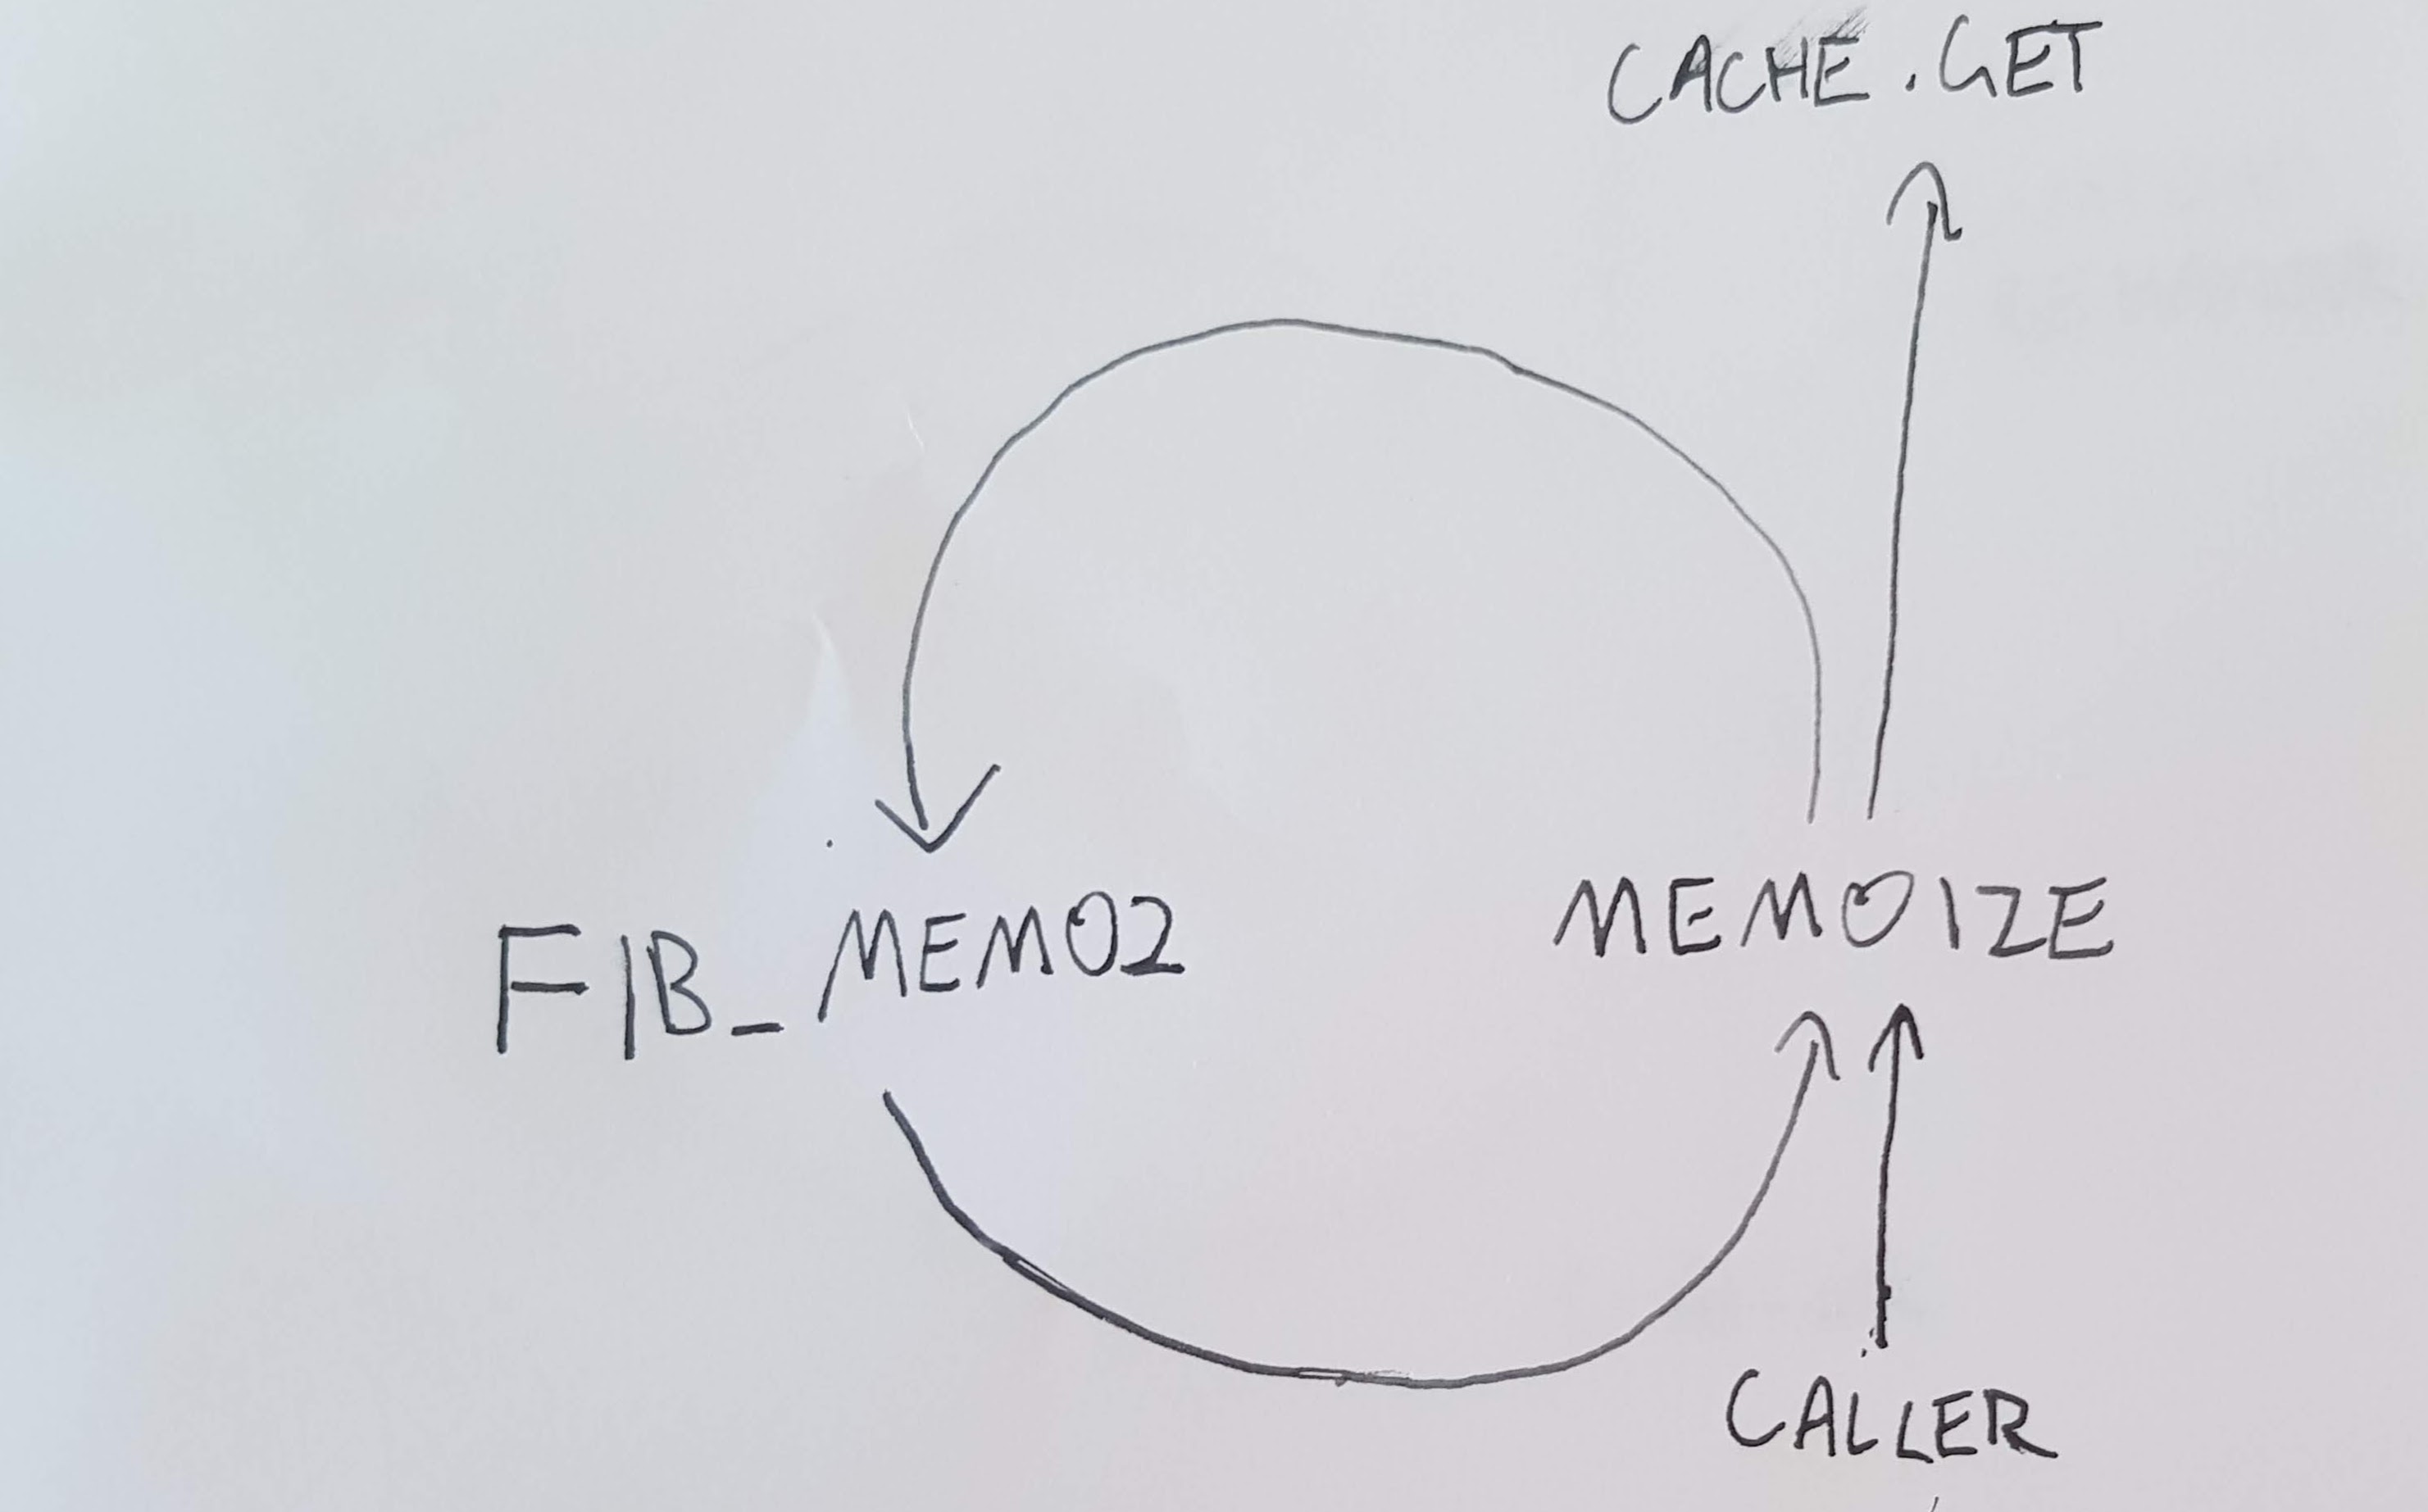 A memoized function